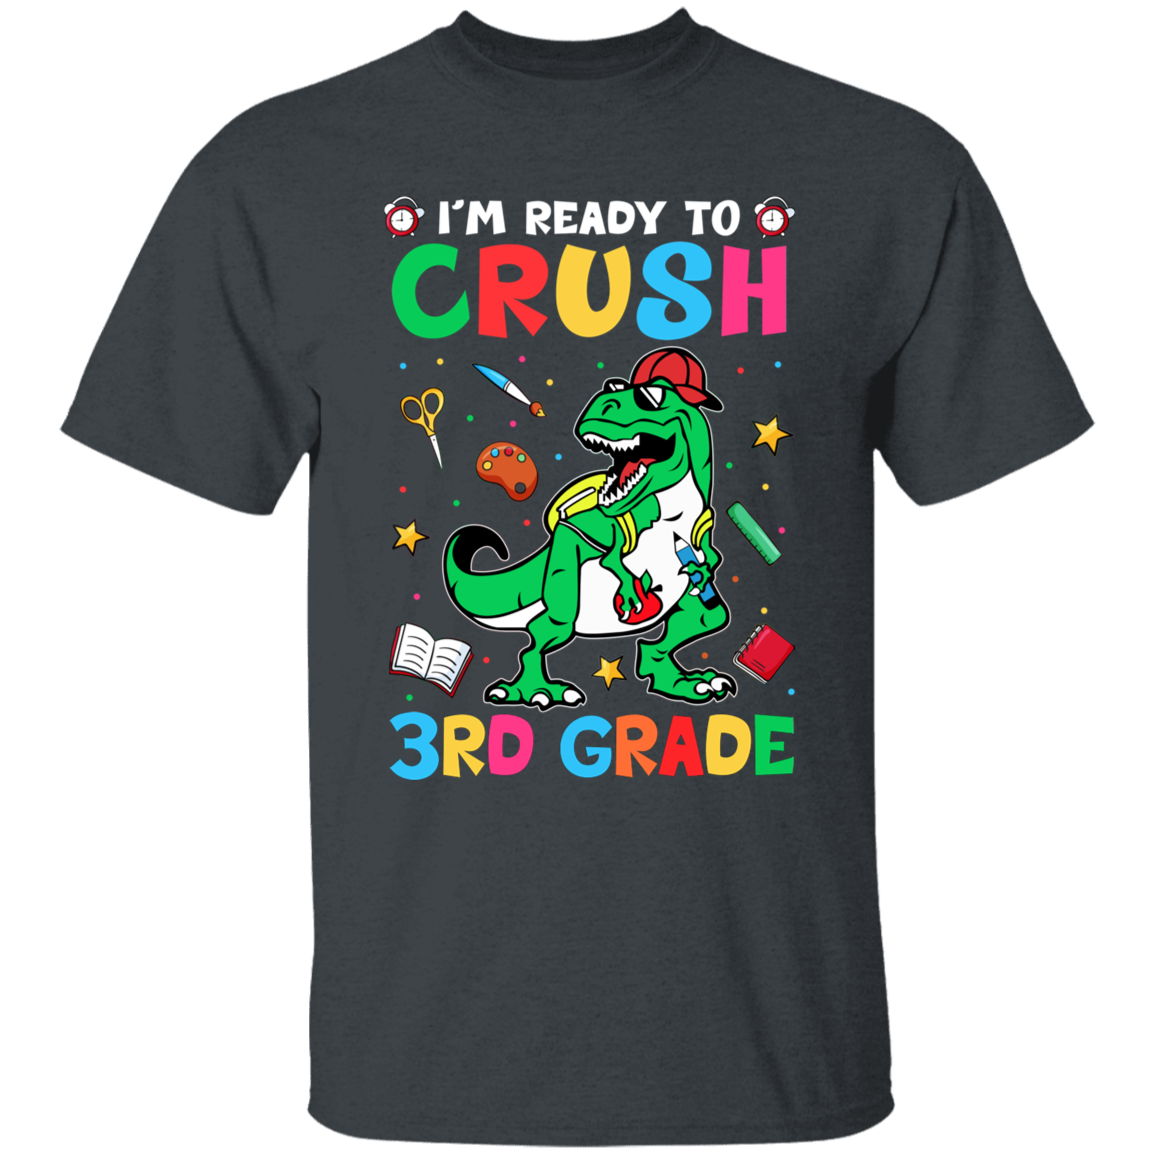 I'm Ready To Crush 3rd Grade Youth Cotton T-Shirt